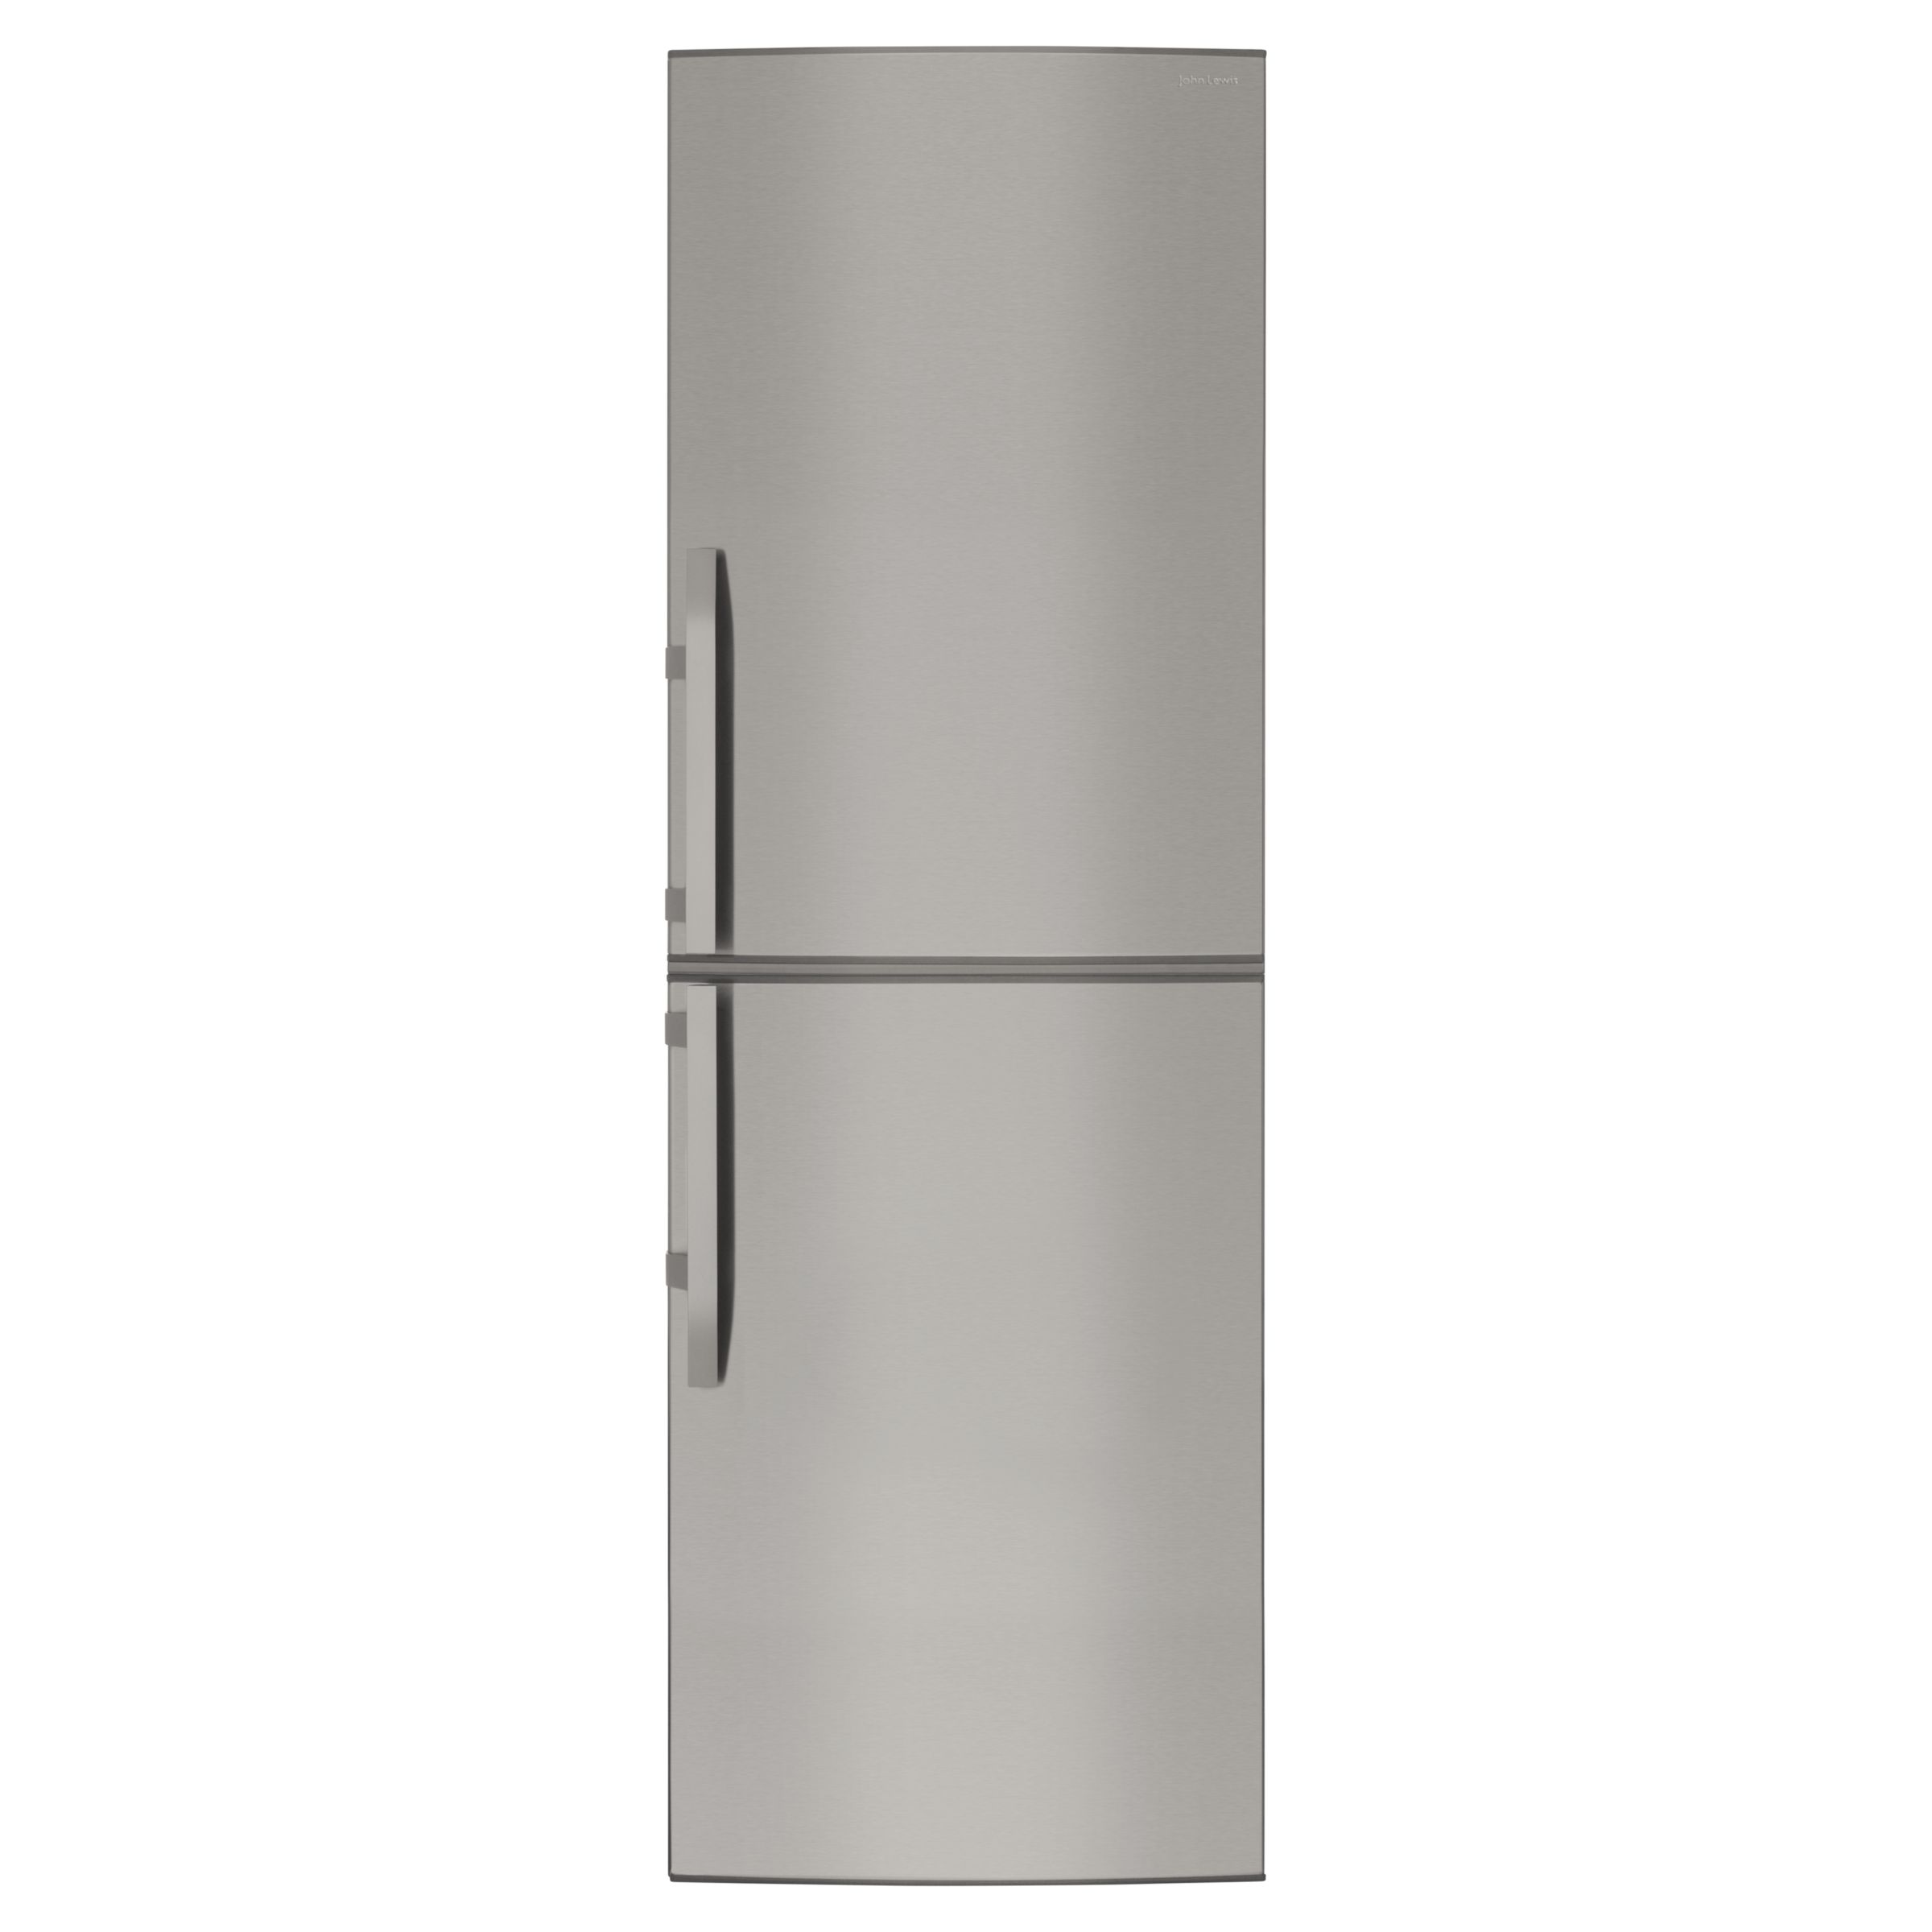 John Lewis JLFFS1820 Fridge Freezer, A+ Energy Rating, 60cm Wide, Stainless Steel